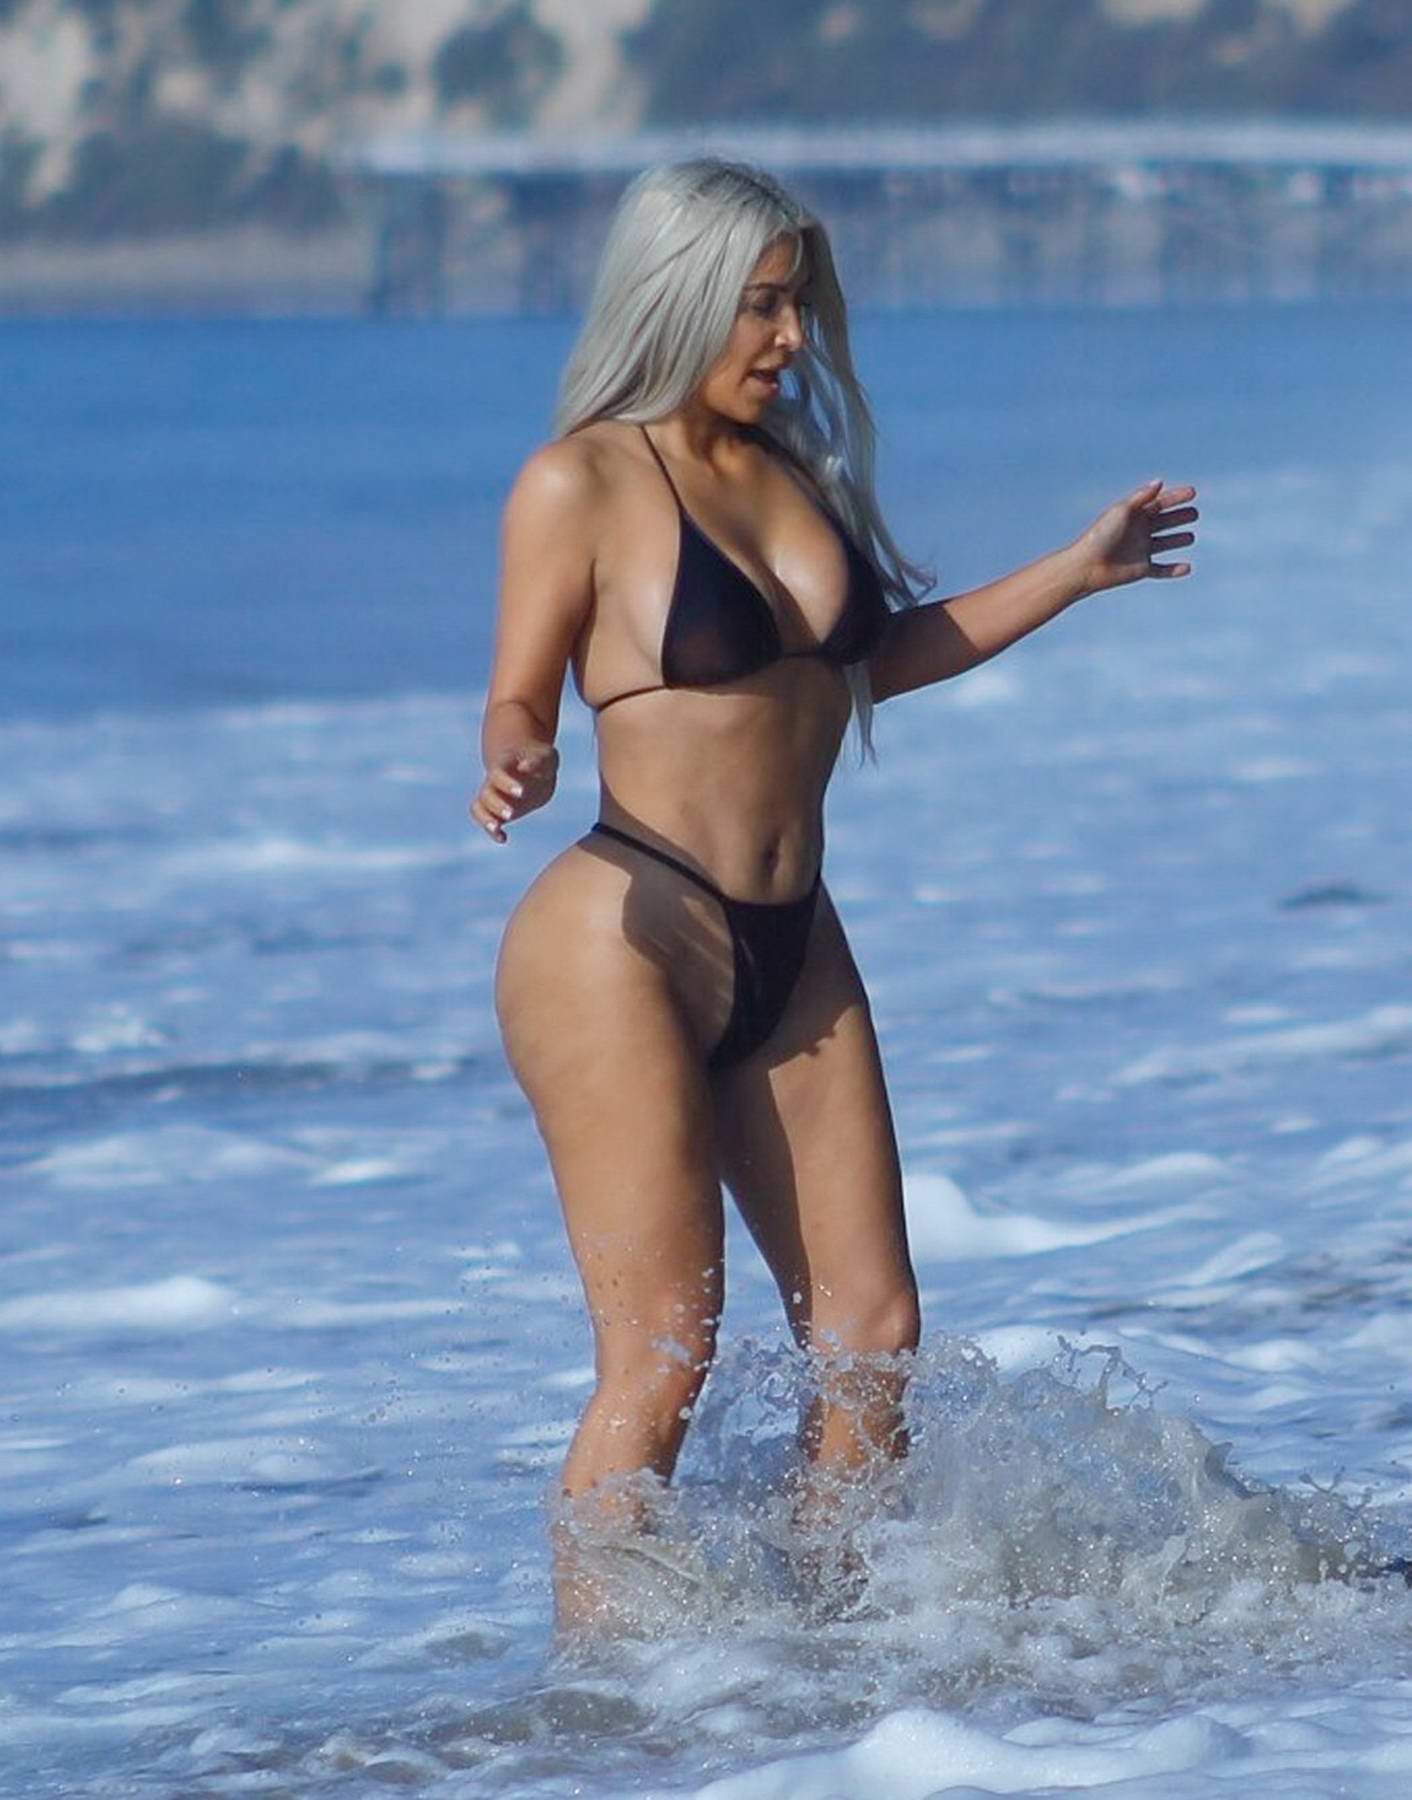 Kim Kardashian In A Black Bikini Enjoying Vacation With A Friend At The Beach